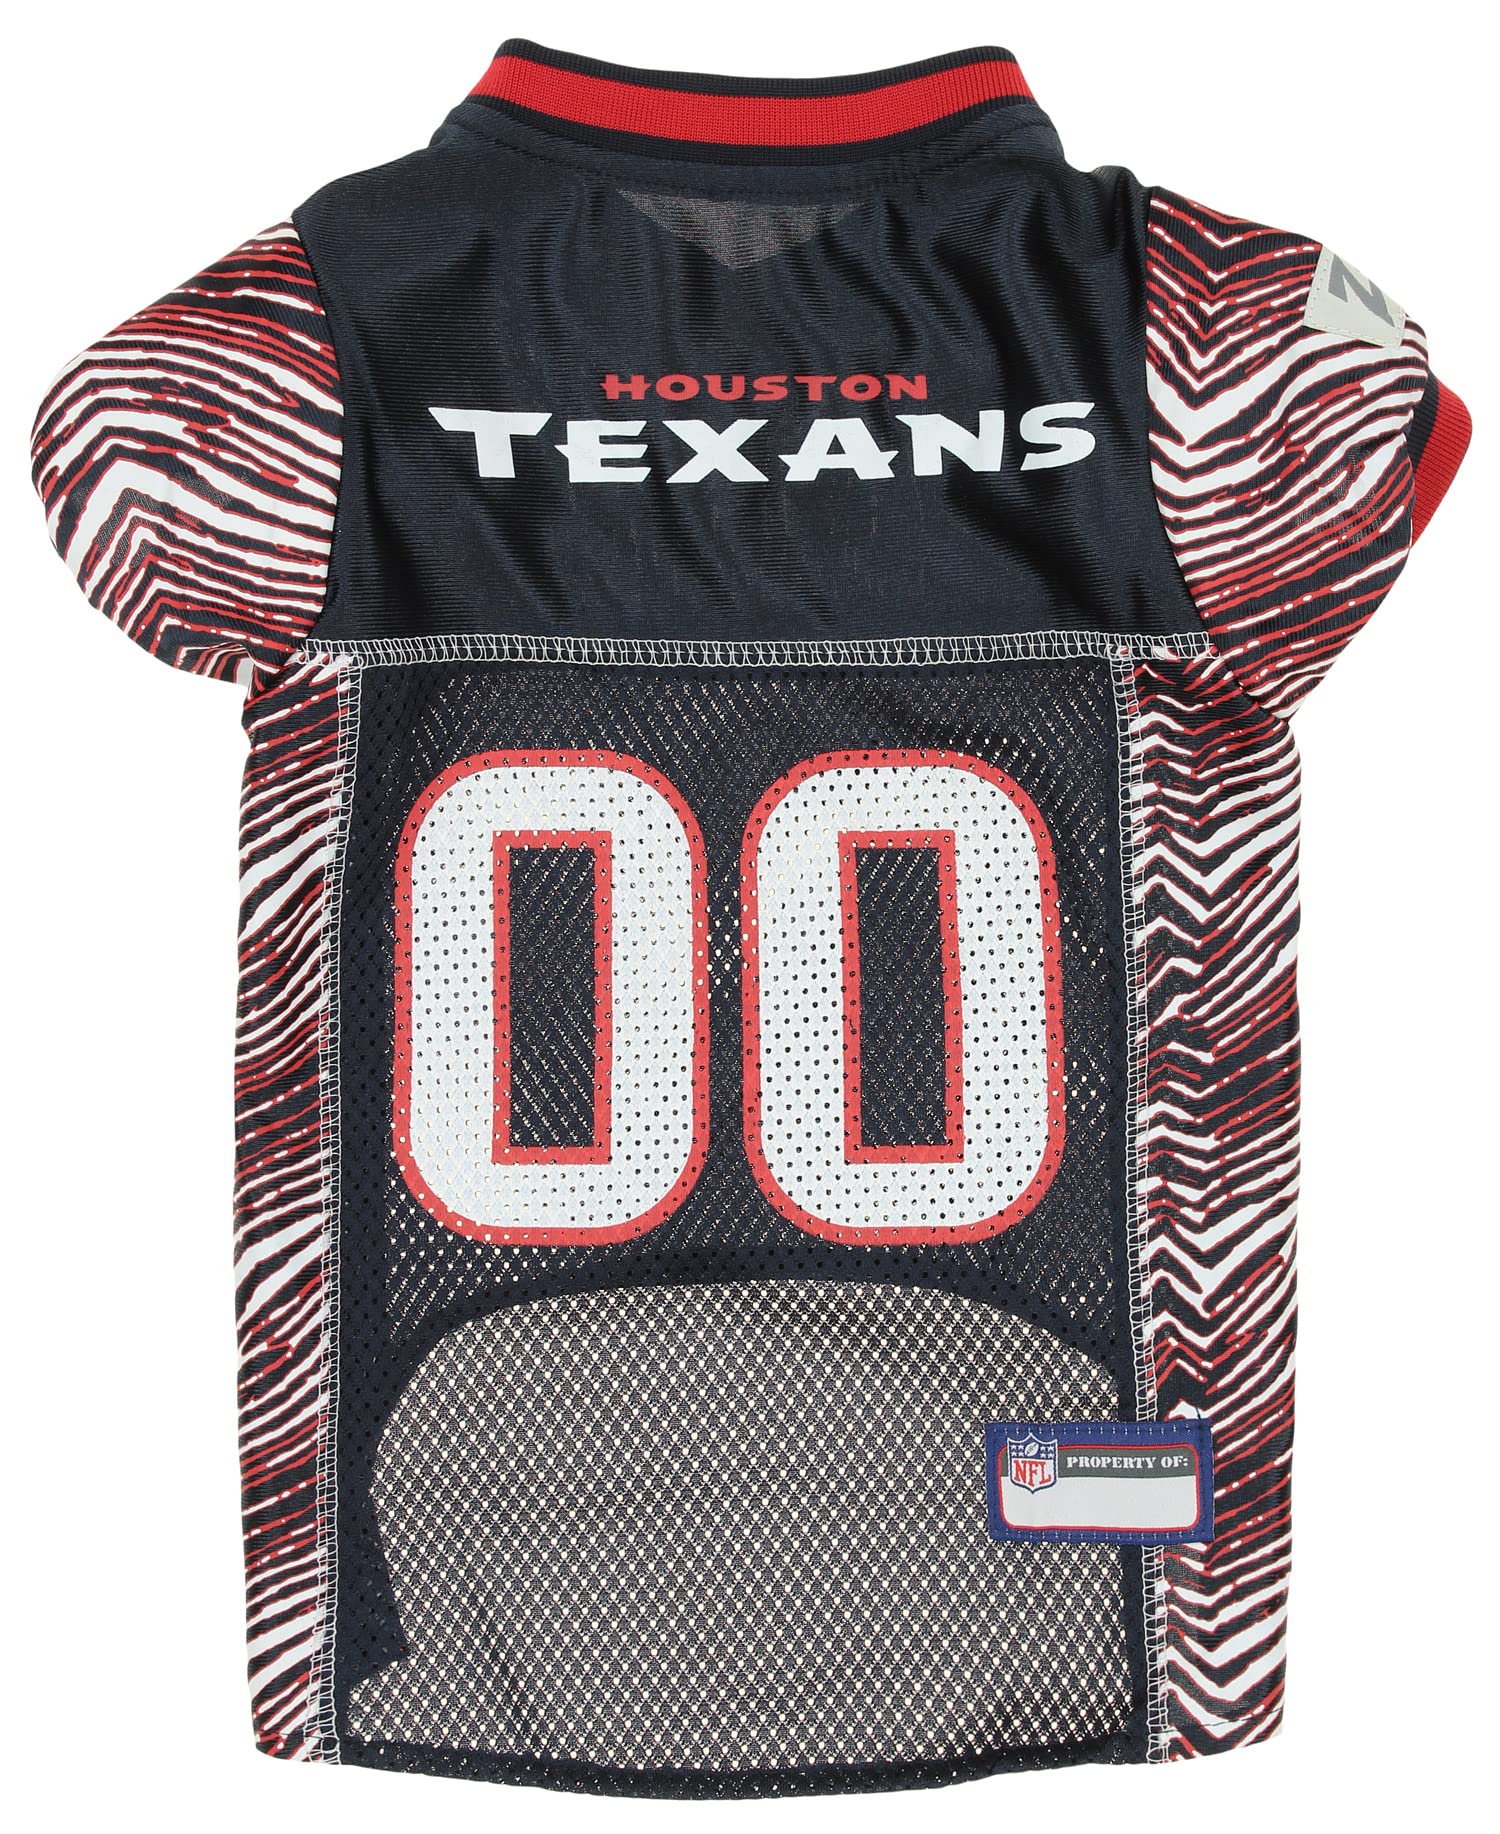 houston texans game worn jersey